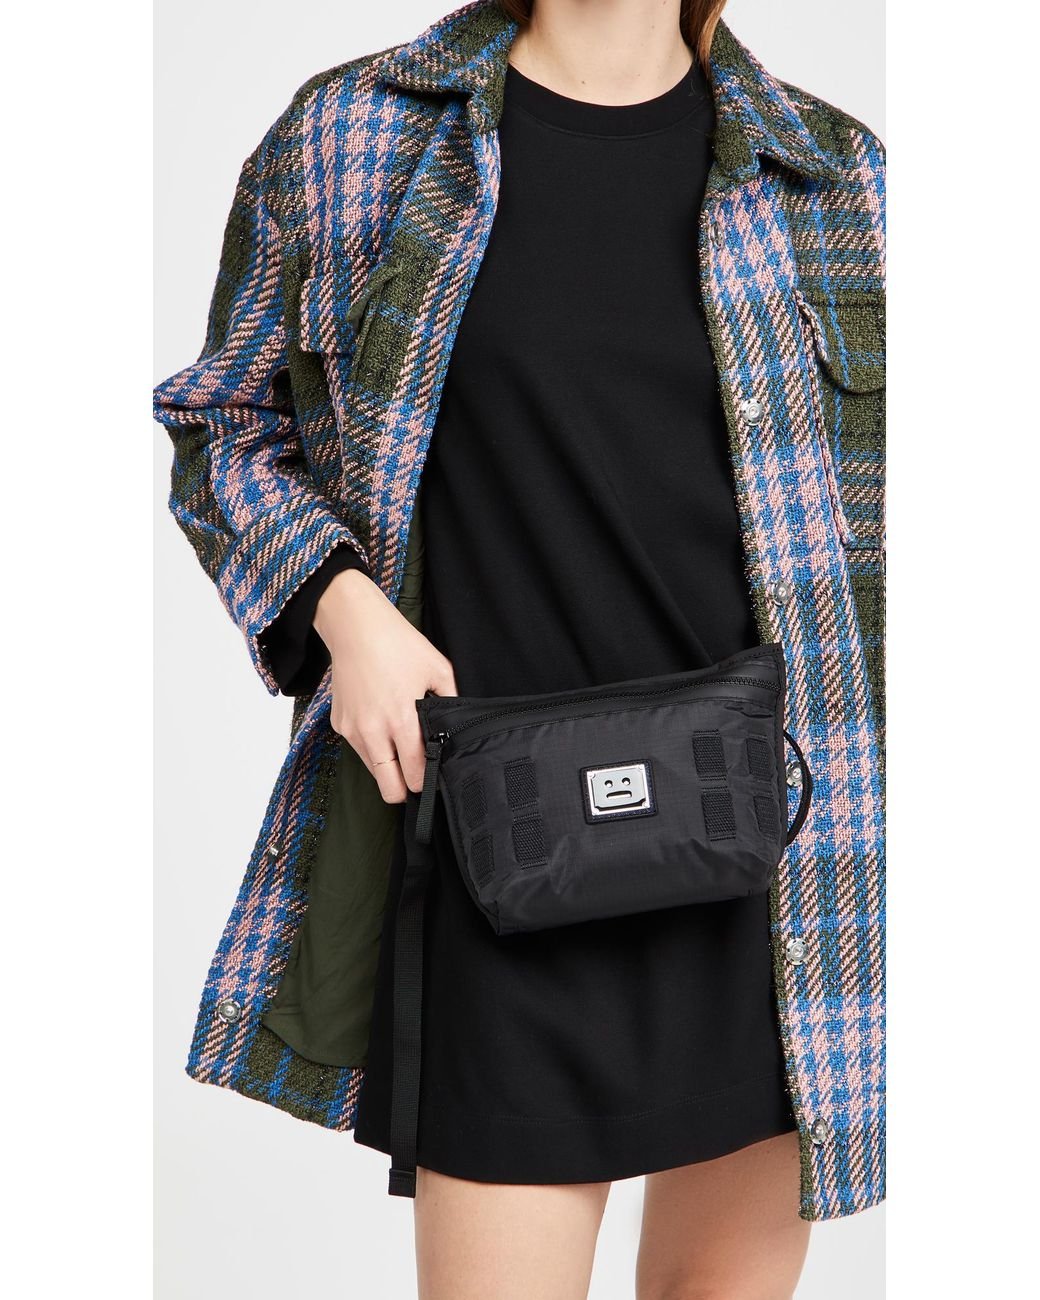 Acne Studios Face Mini Faux Leather Crossbody Bag in Black for Men